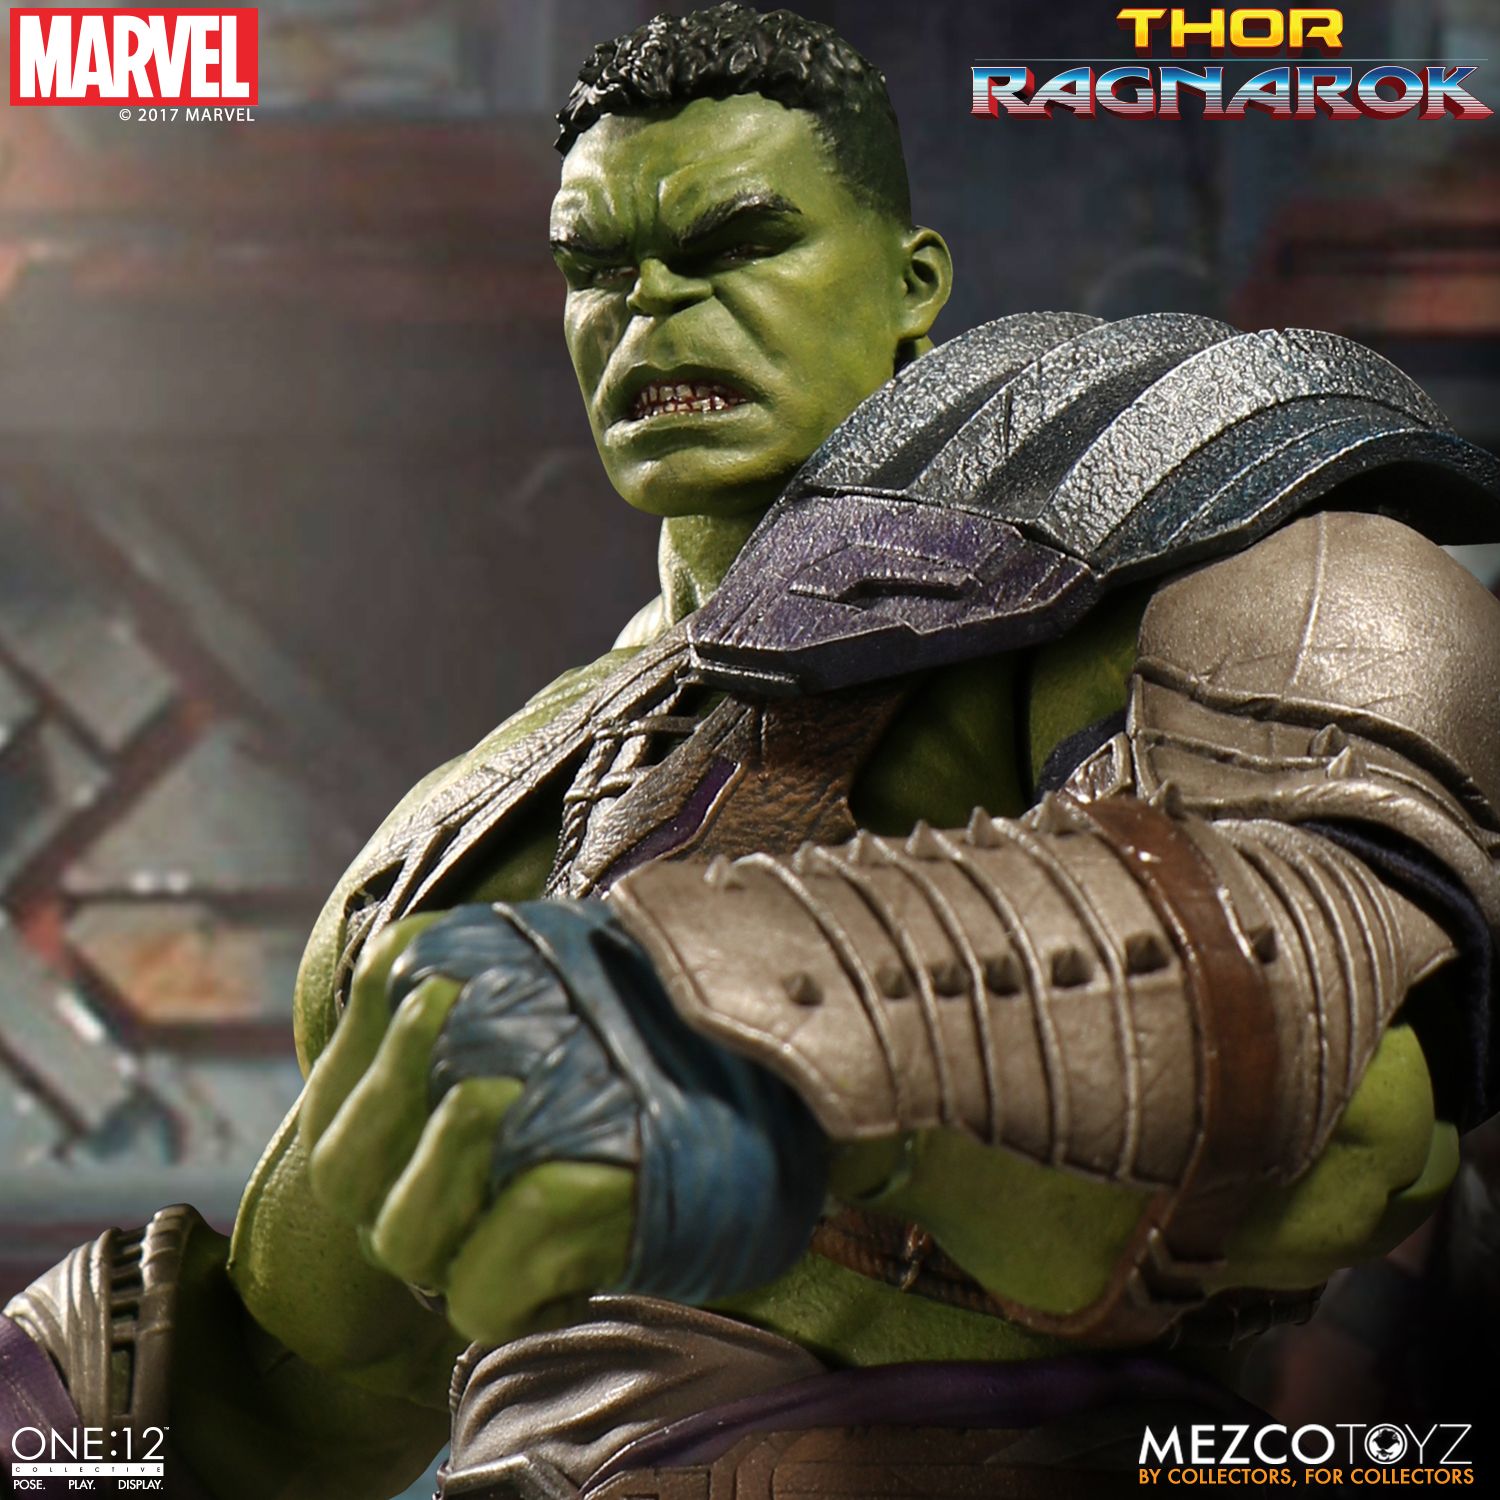  Mezco Toys One: 12 Collective: Marvel Thor Ragnarok